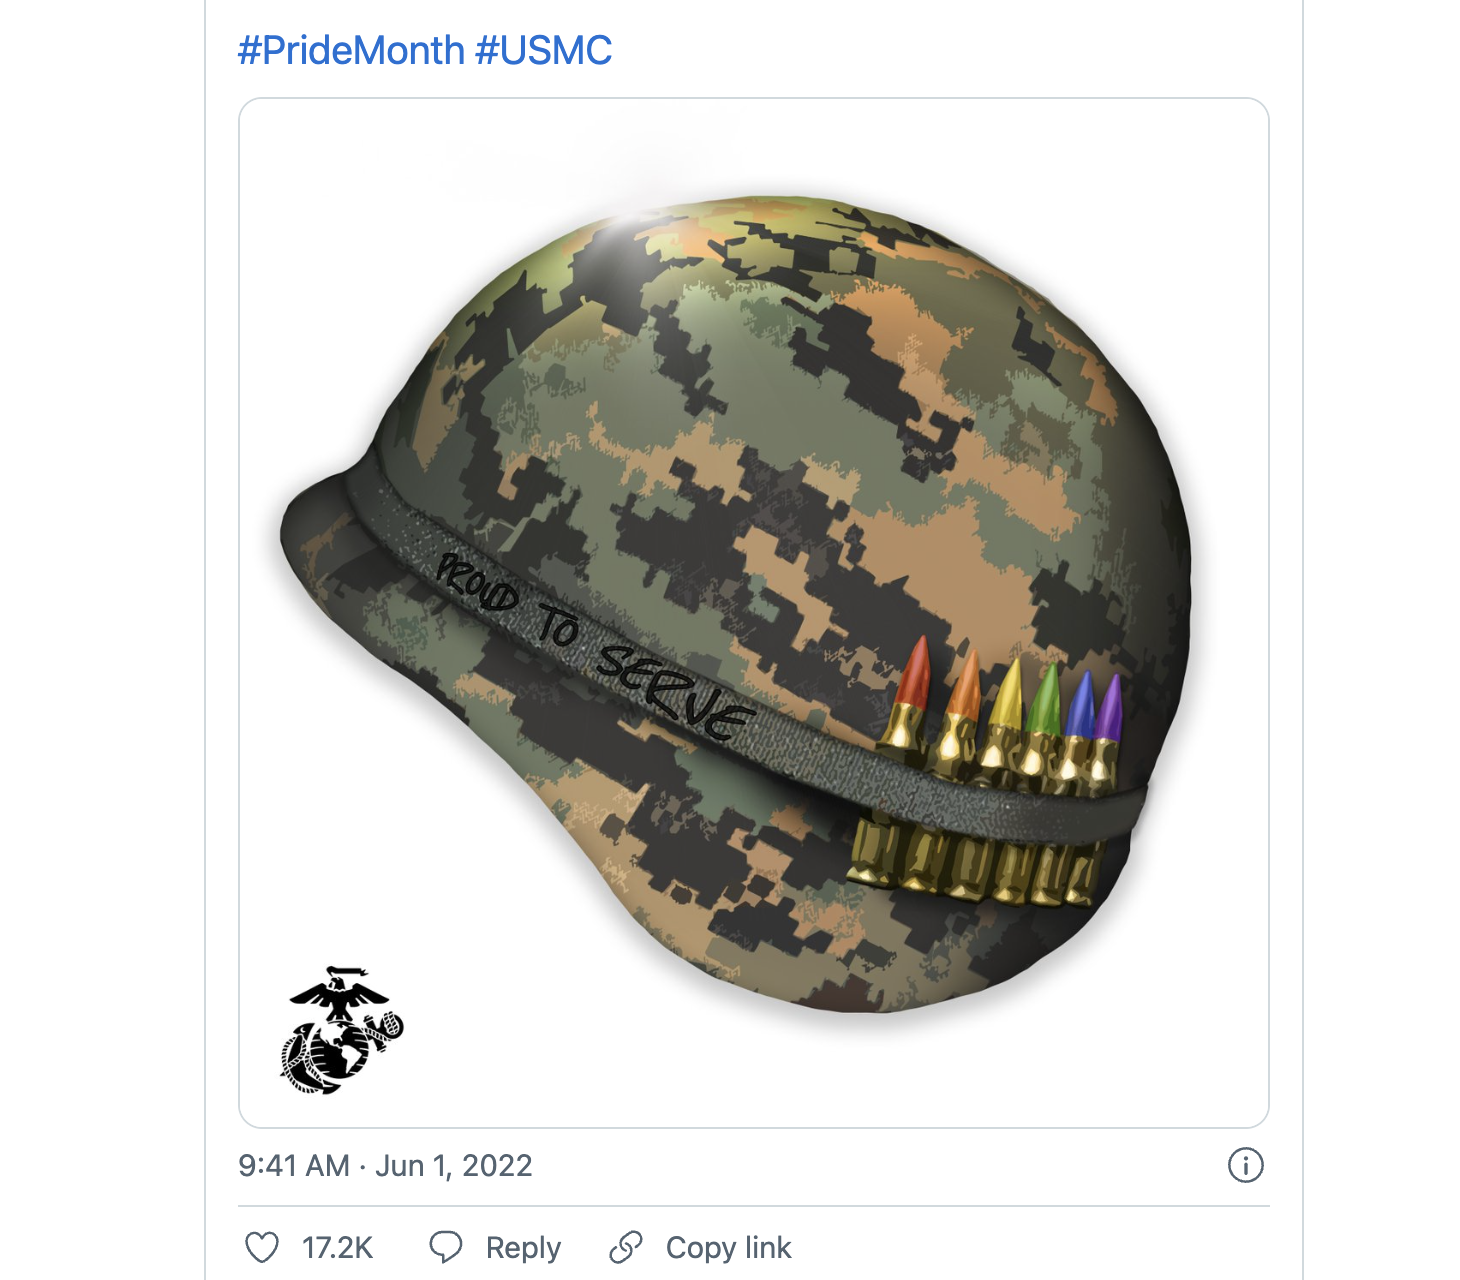 US Marine Corp image of battle helmet adorned with rainbow-hued bullets